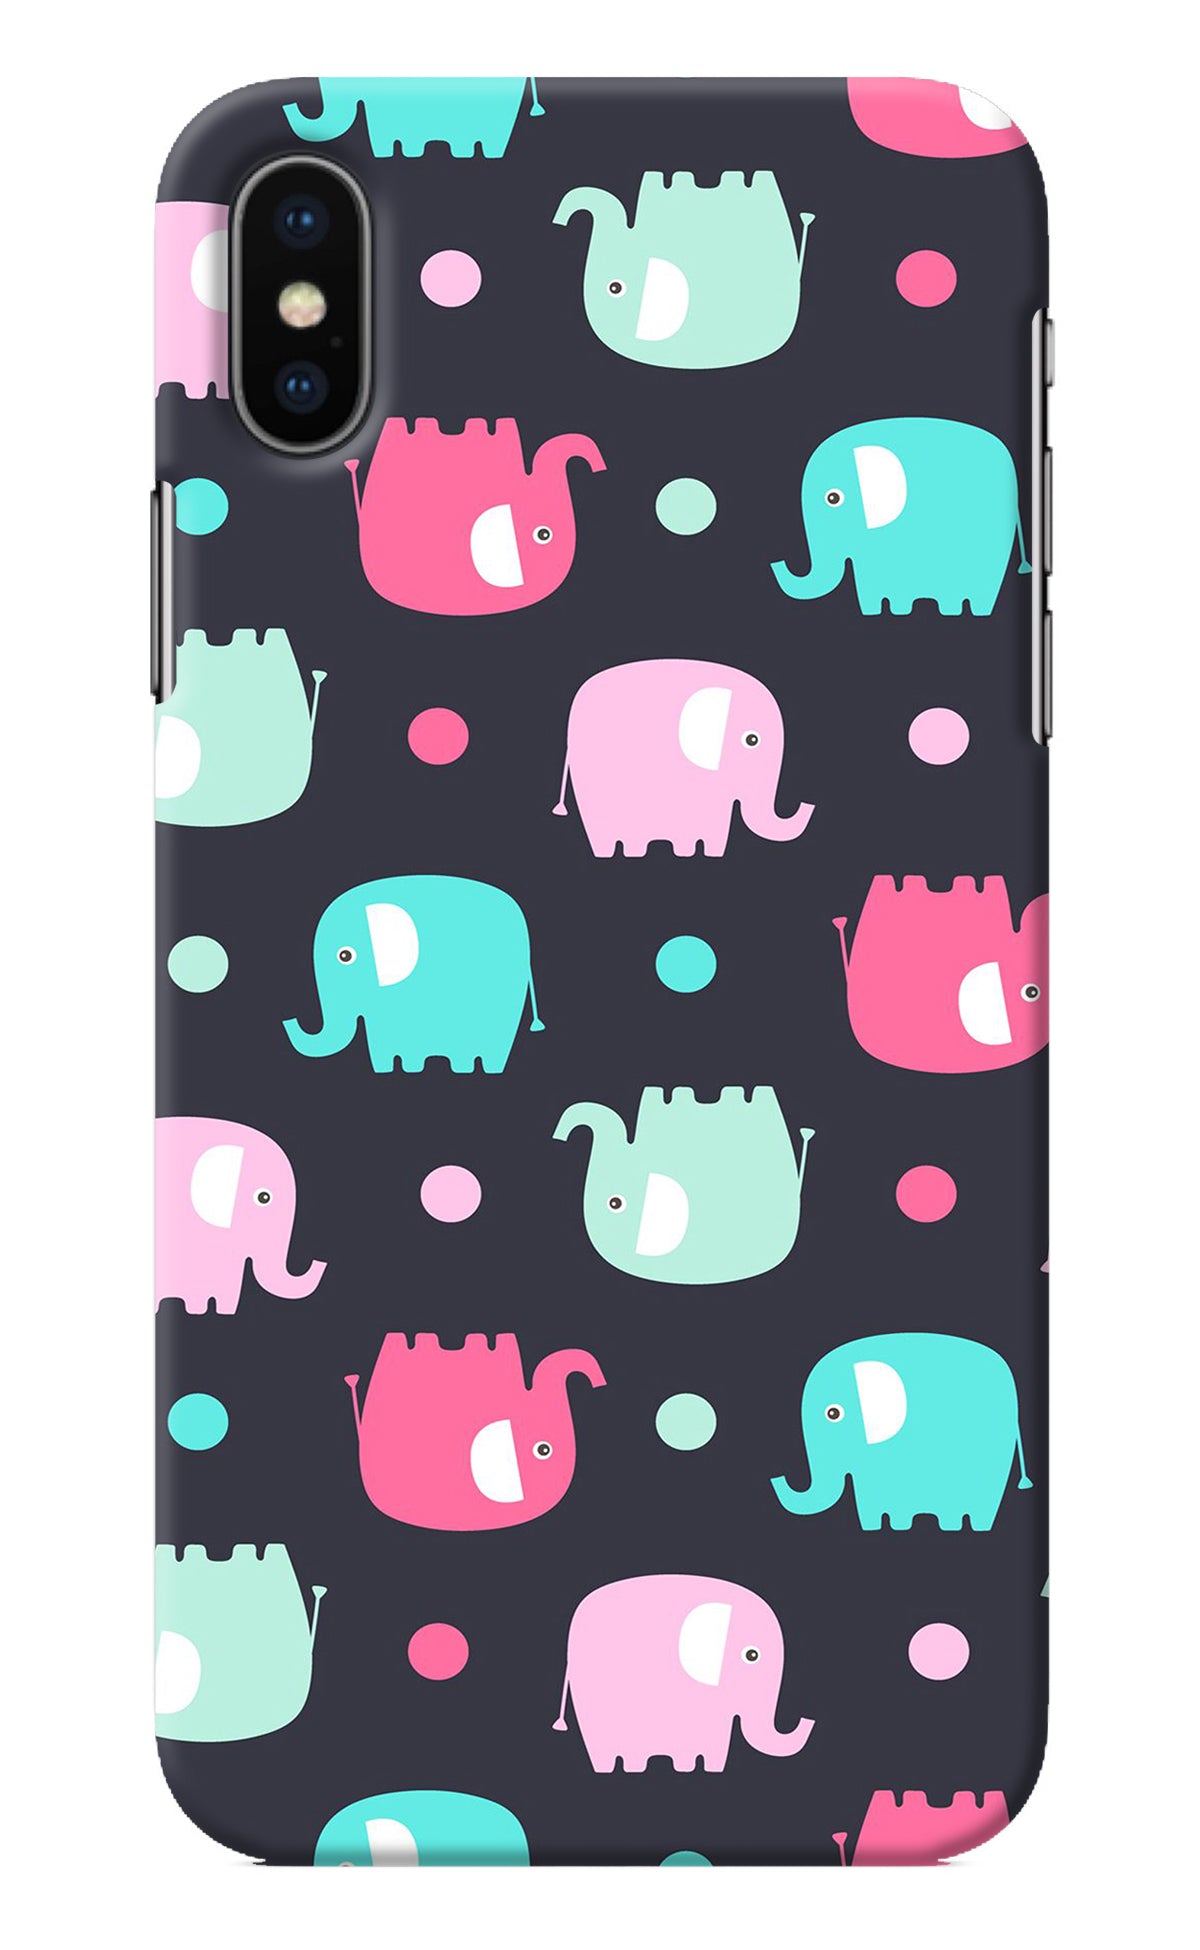 Elephants iPhone XS Back Cover